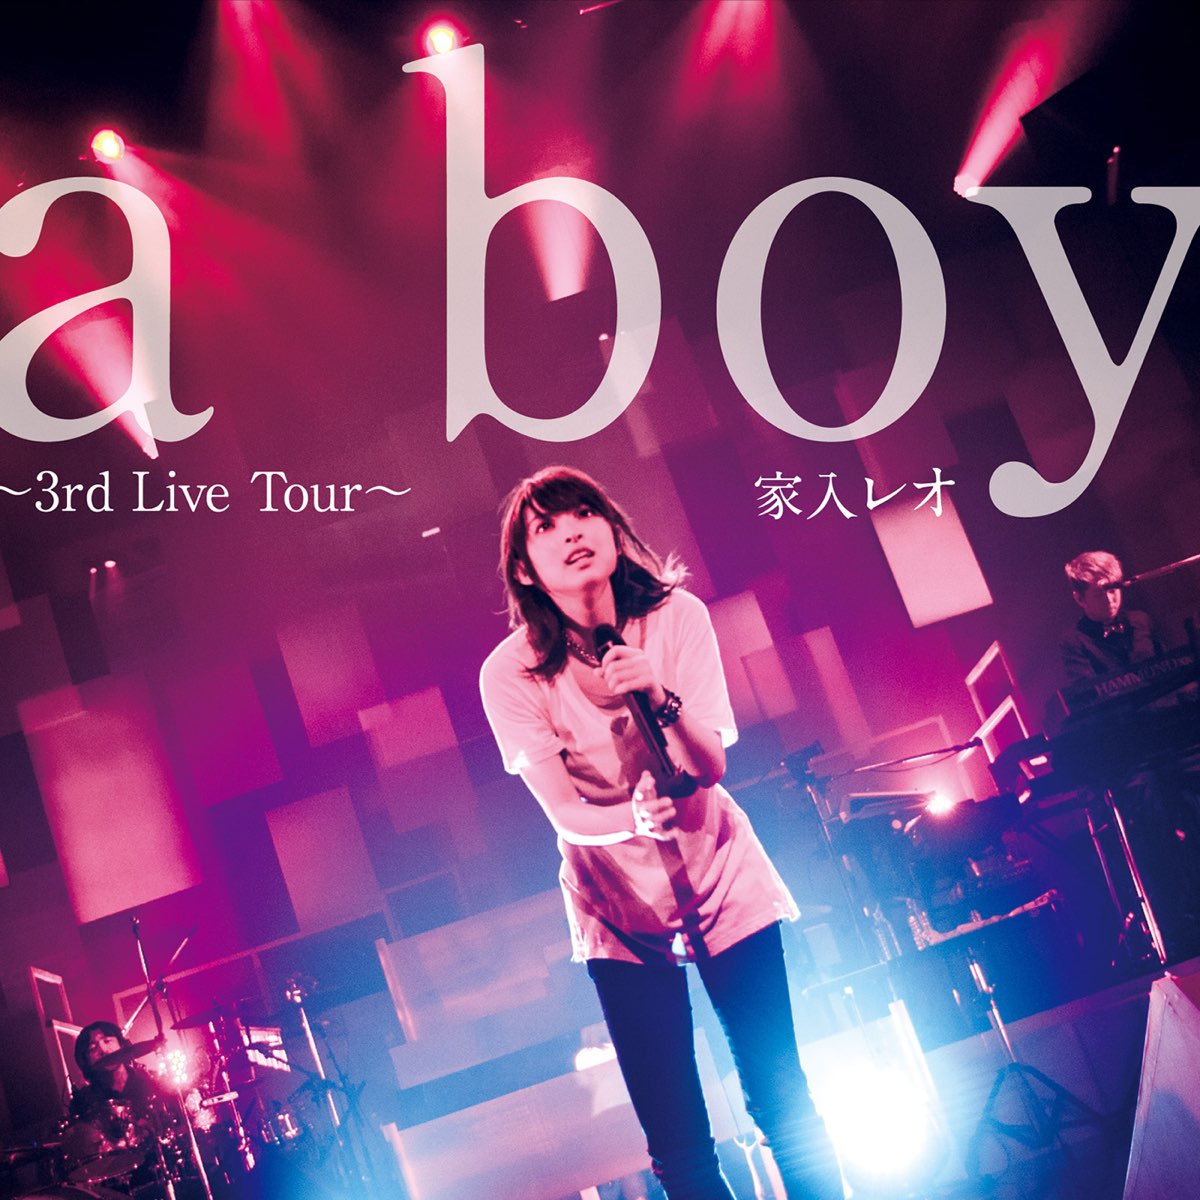 a boy ~3rd Live Tour~ - 家入レオのアルバム - Apple Music